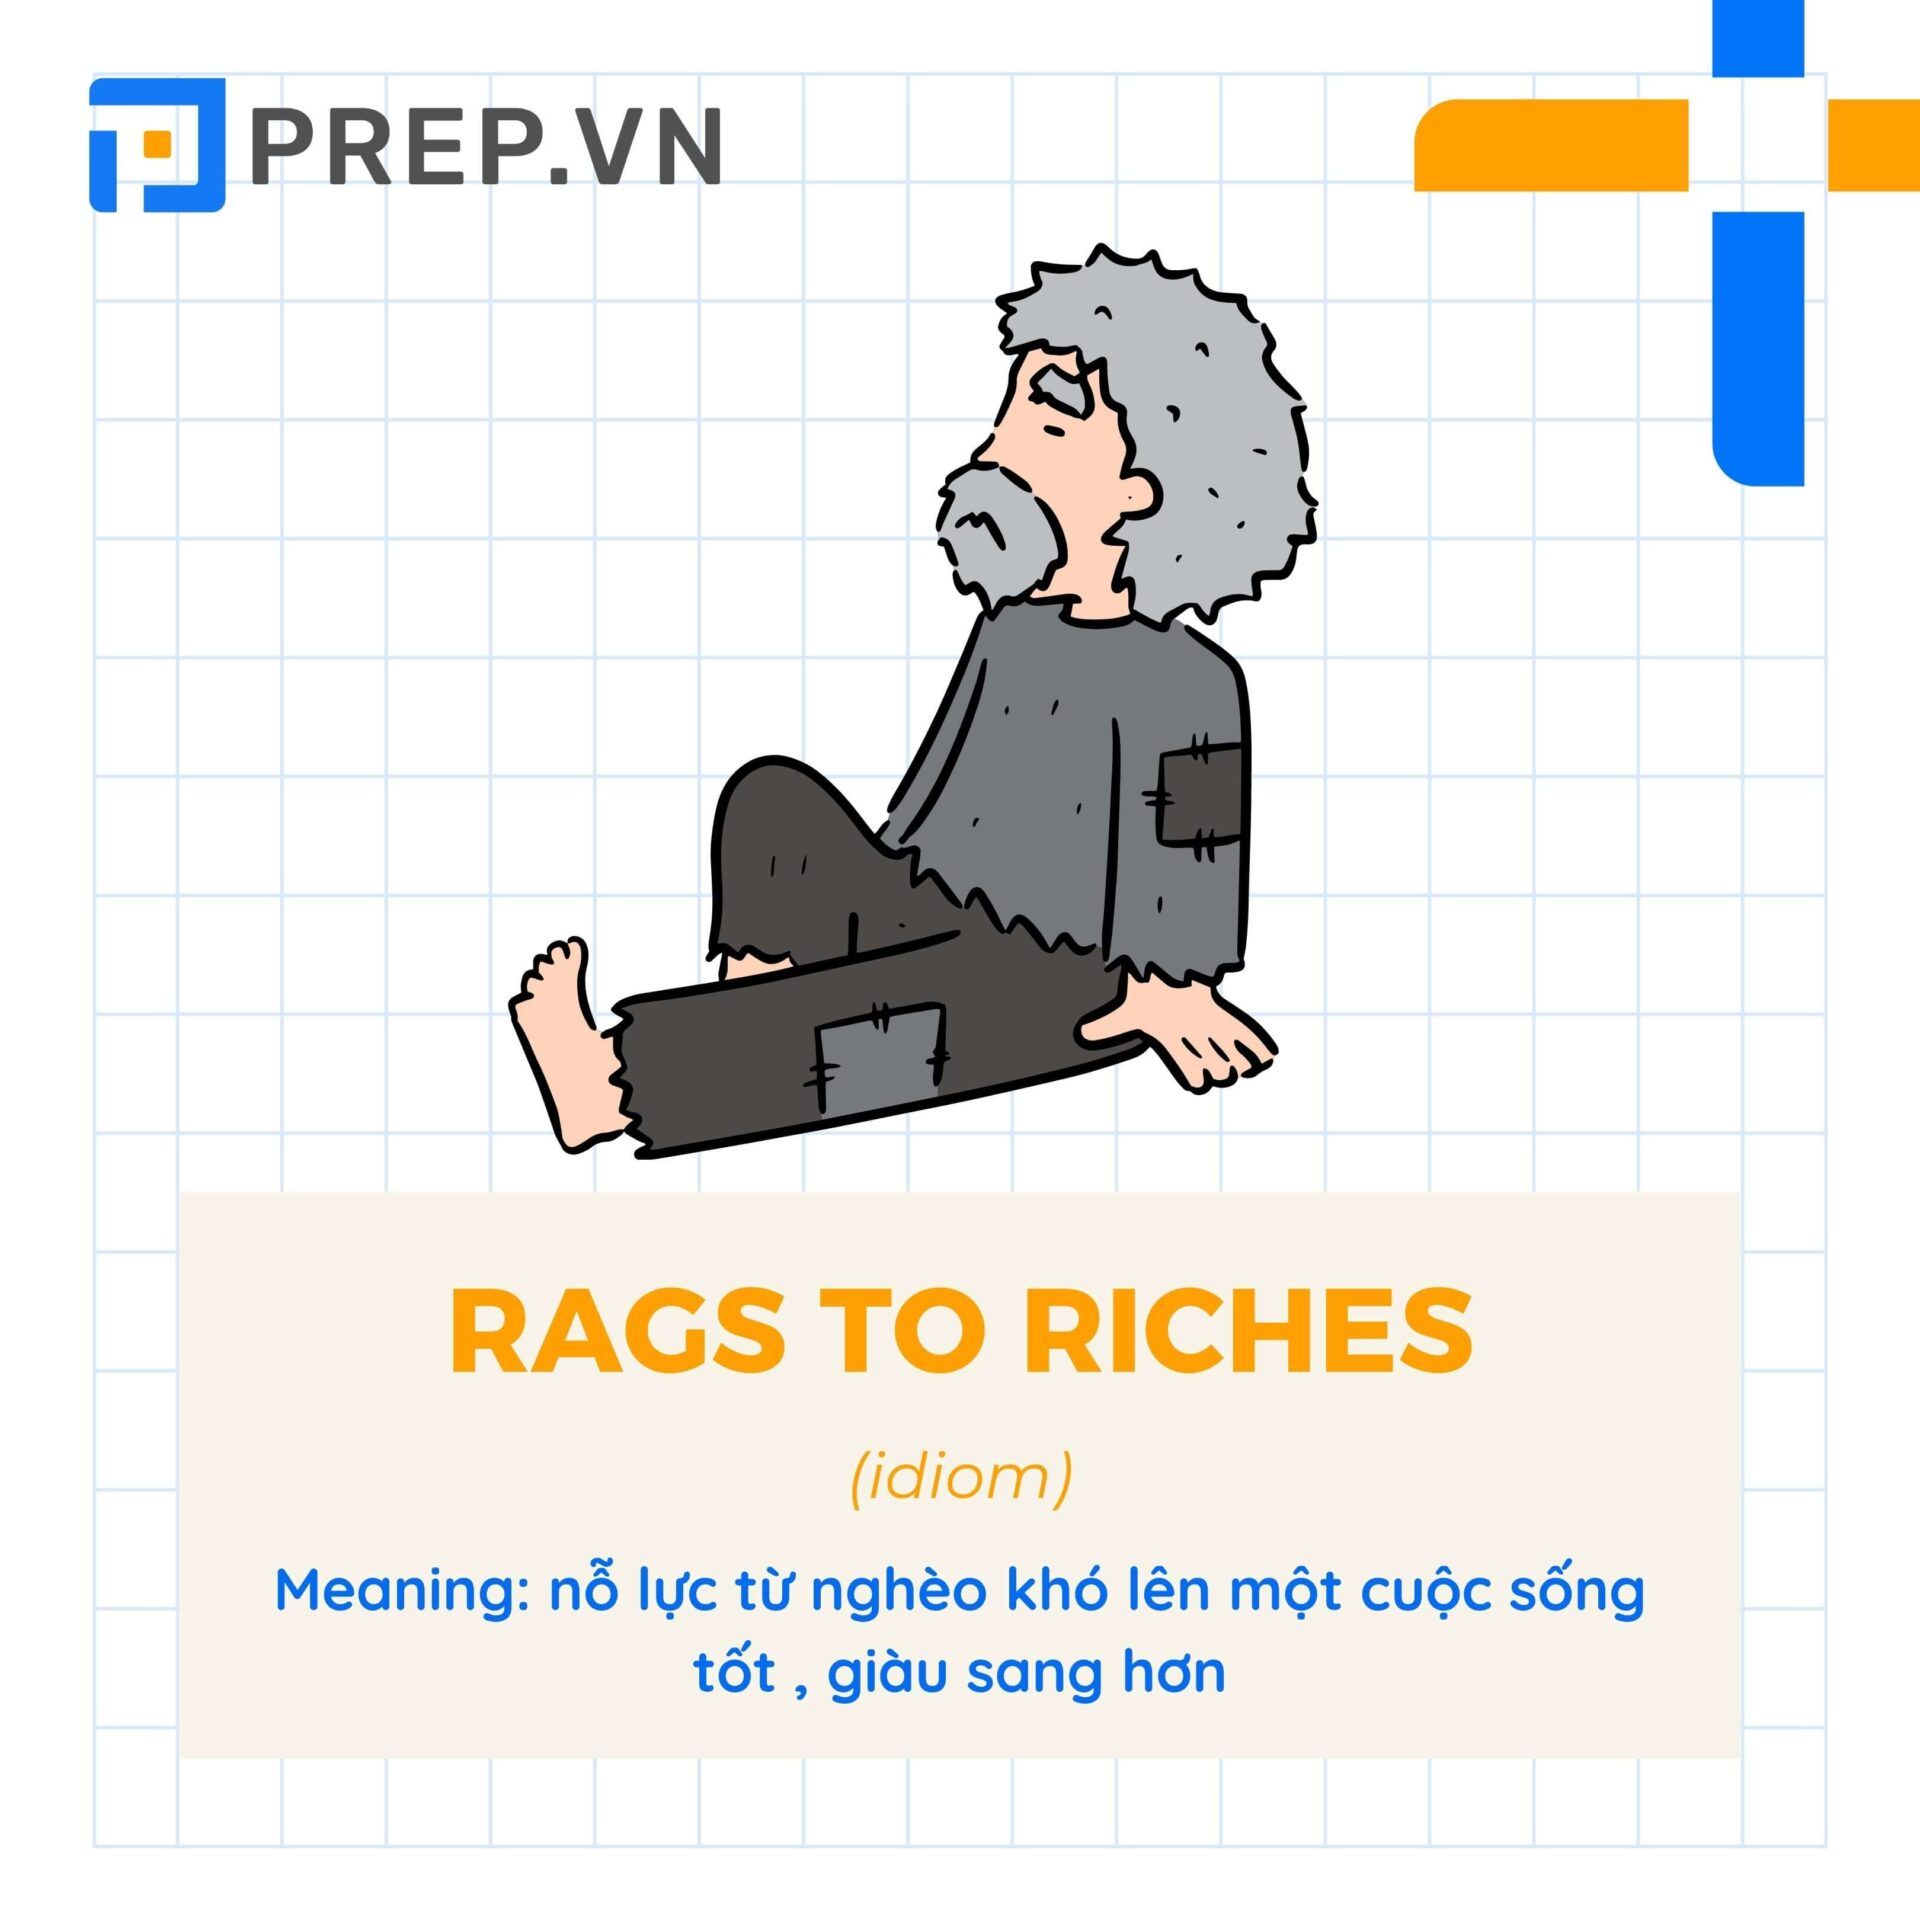 Thành ngữ "Rags to riches"